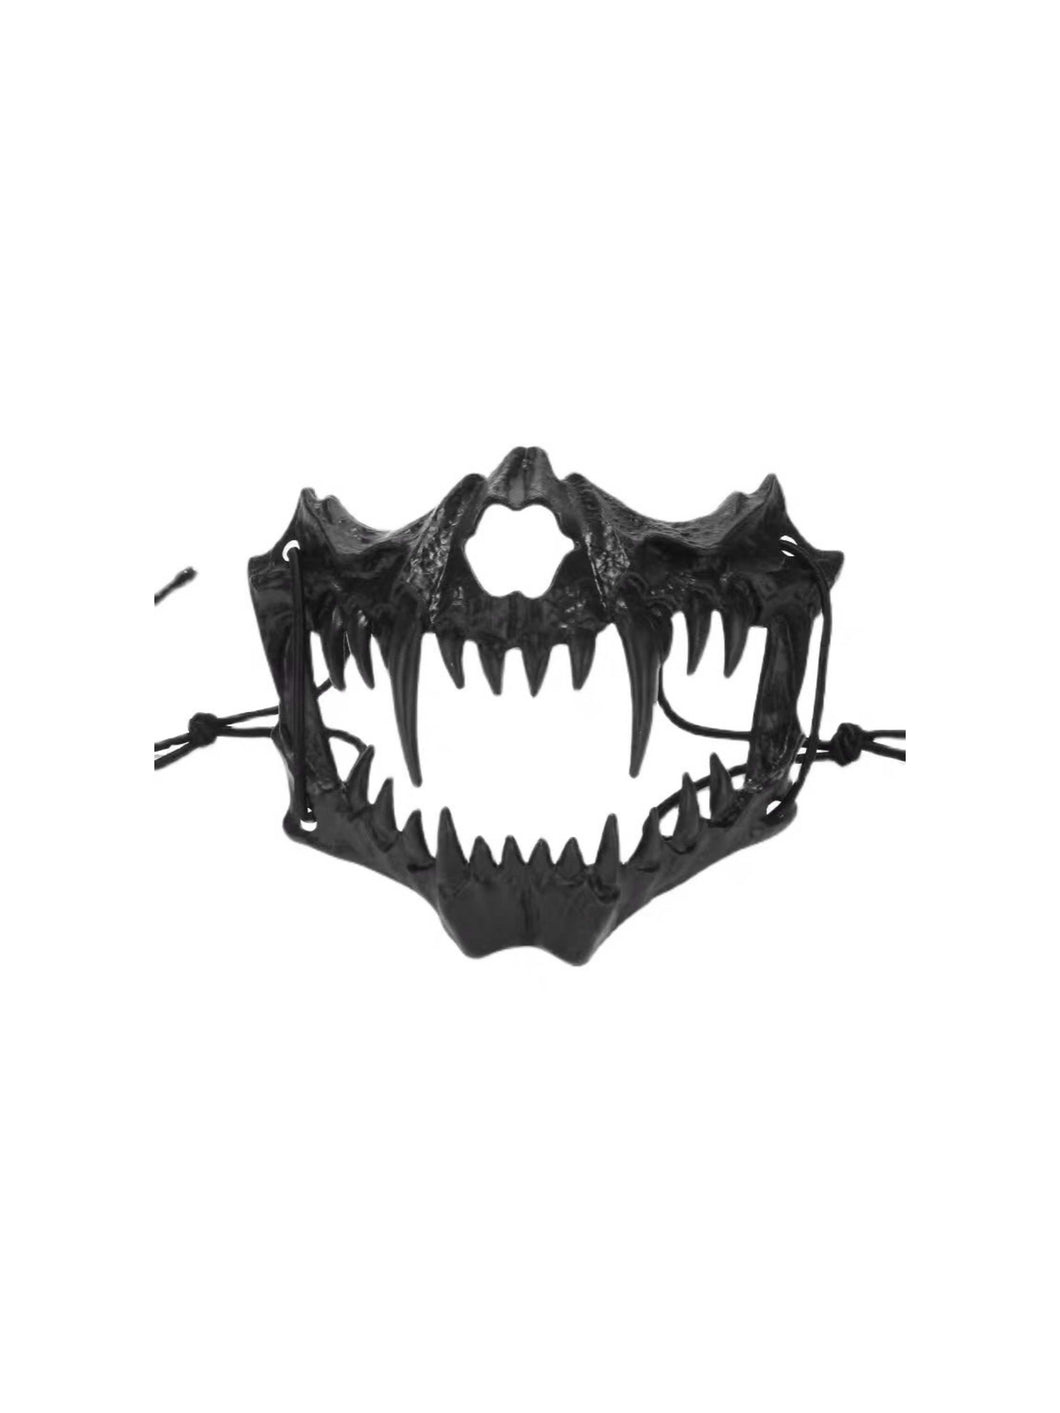 'Cretaceous' Bone Costume Face Mask AlielNosirrah